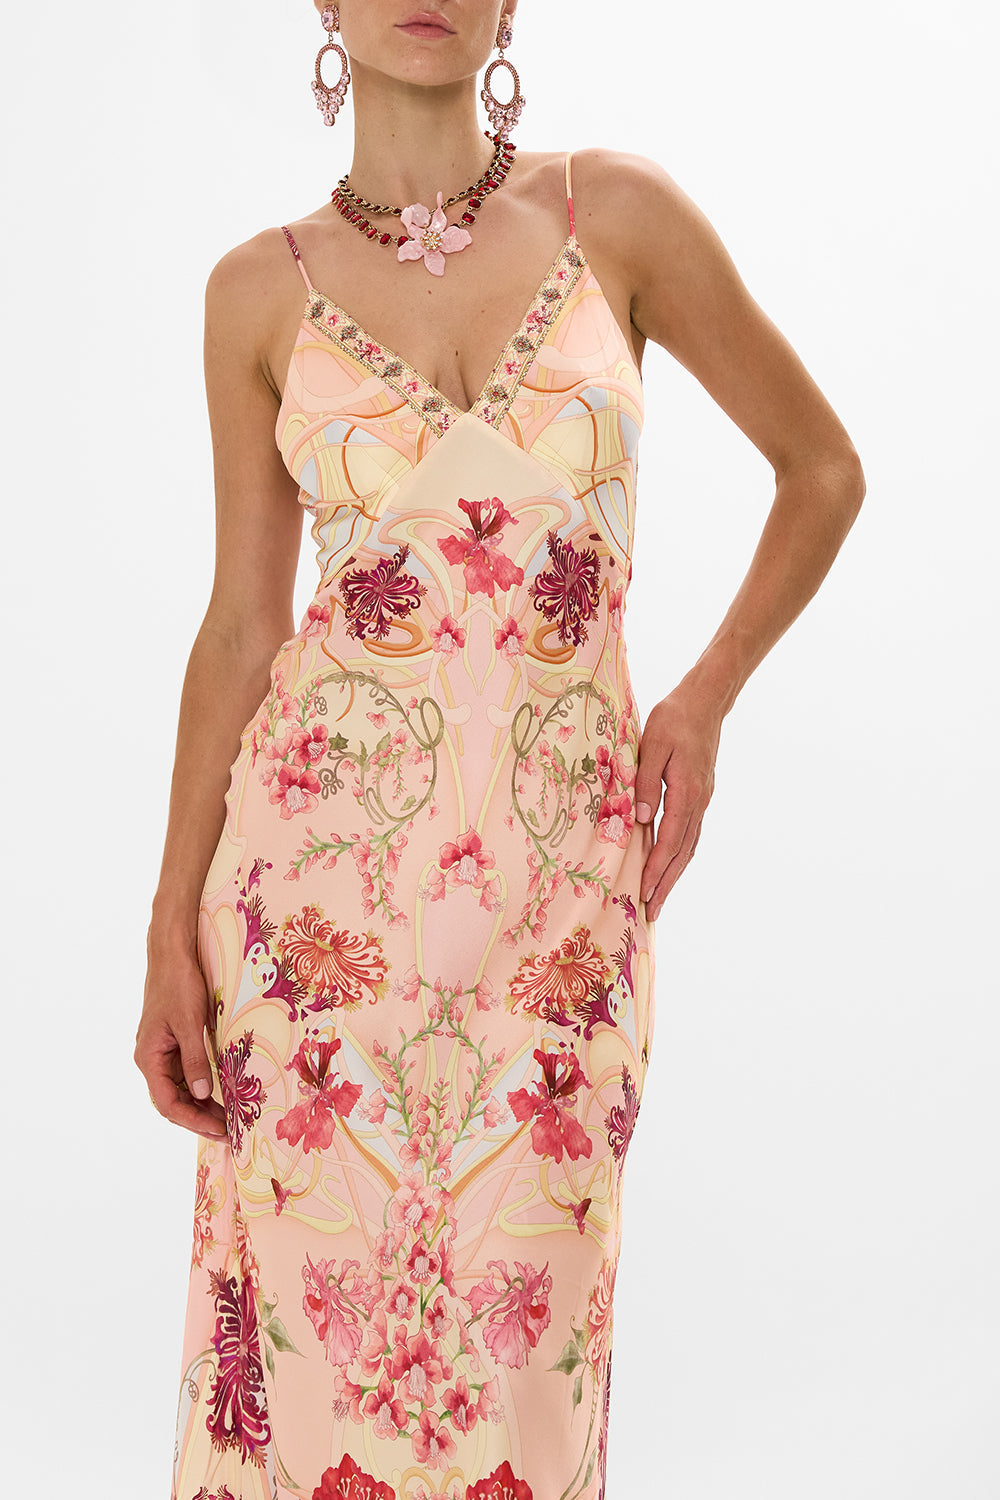 CAMILLA Floral V-Neck Full Length Bias Slip Dress in Blossoms and Brushstrokes